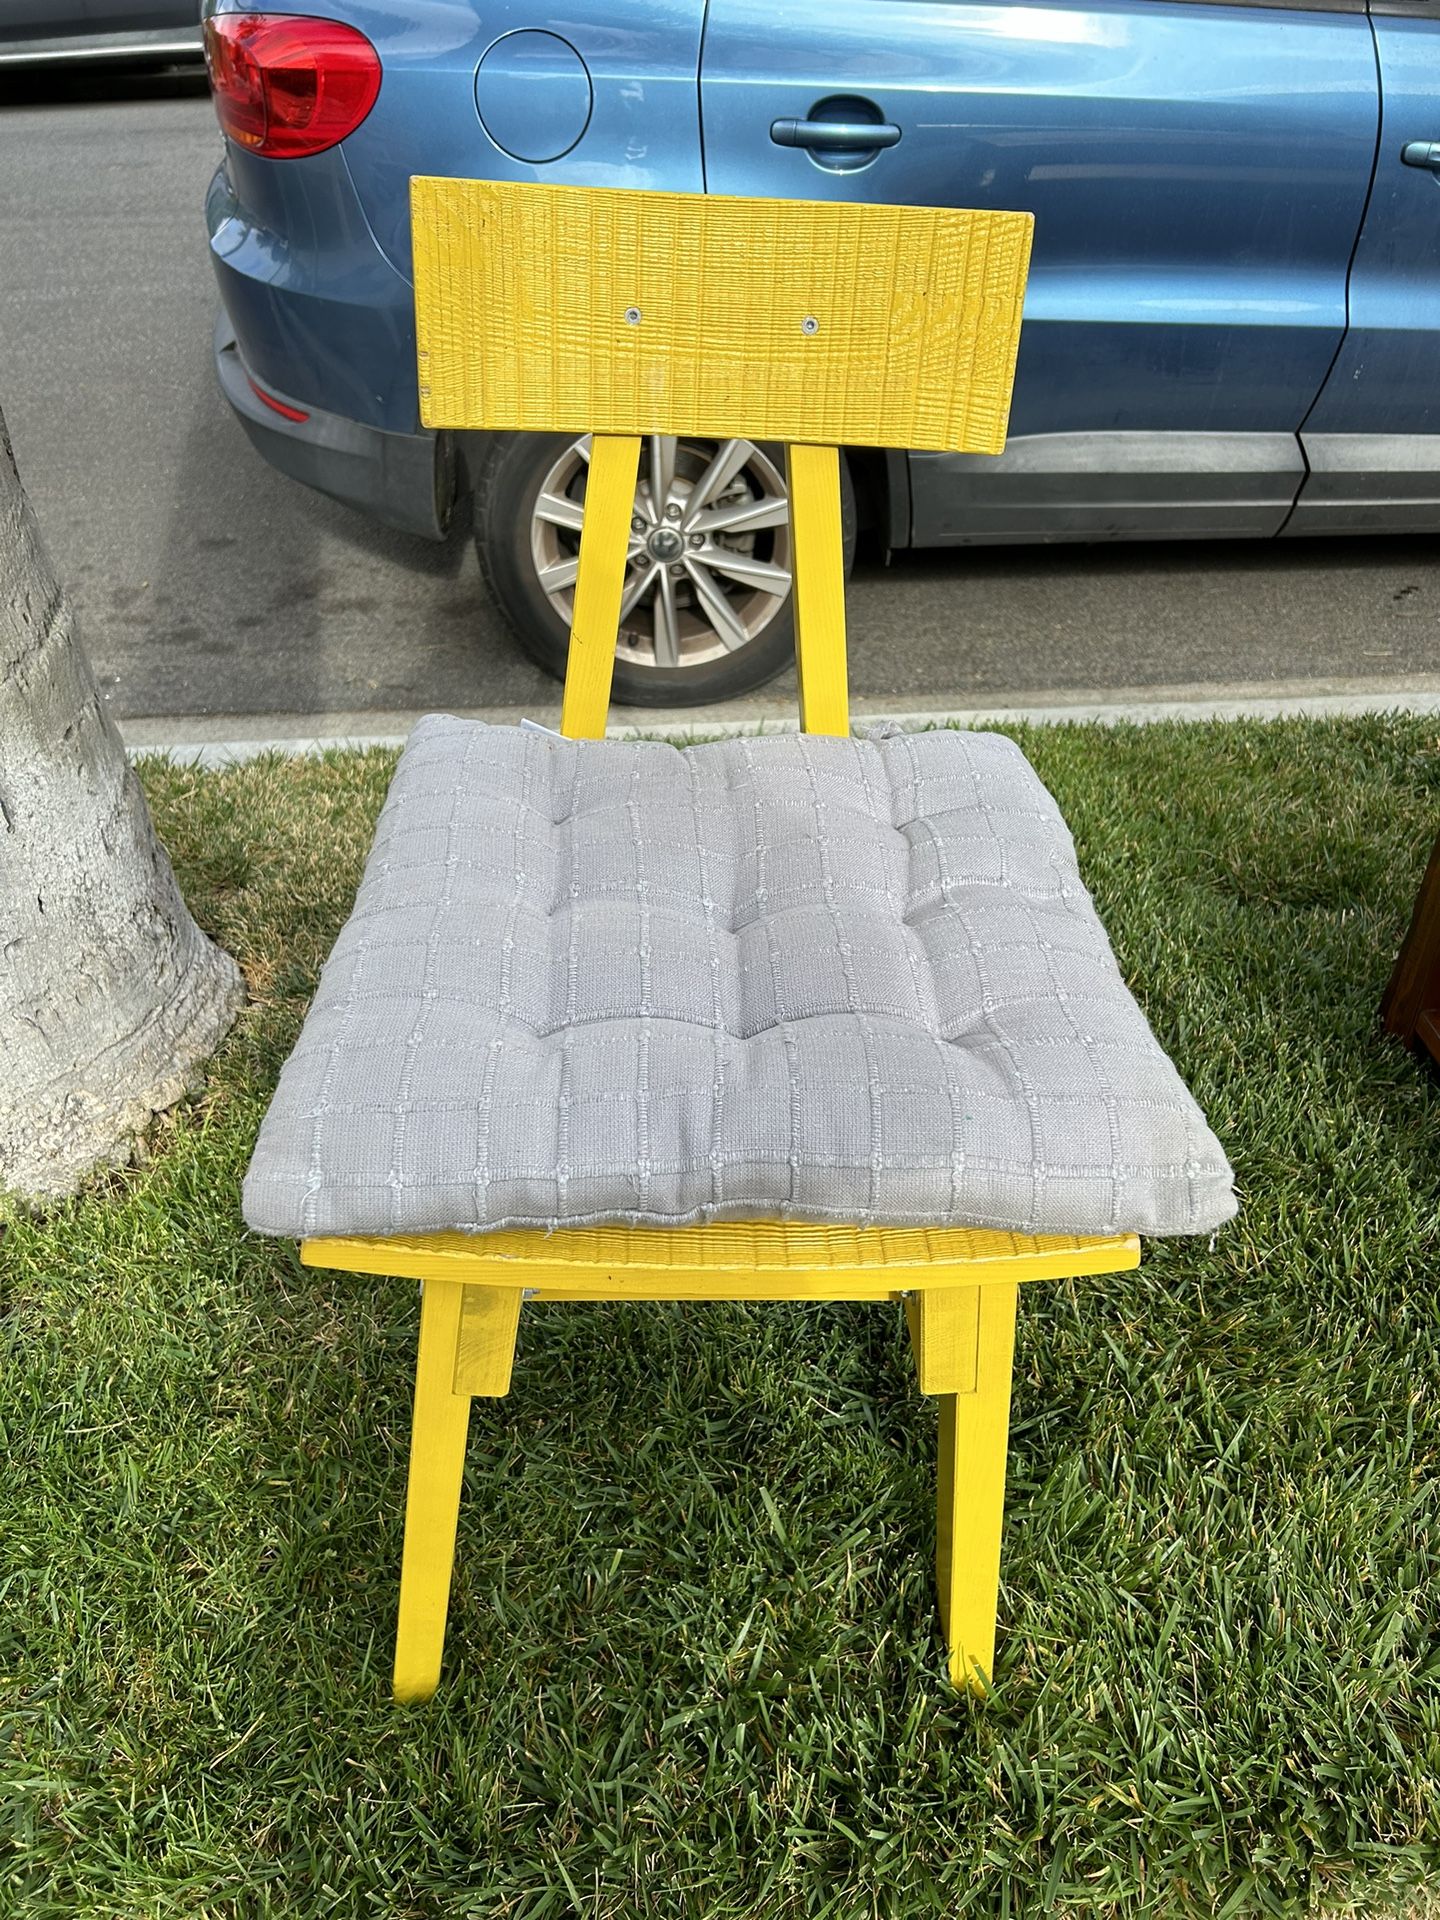 2 Yellow Chairs W/ Cushions 